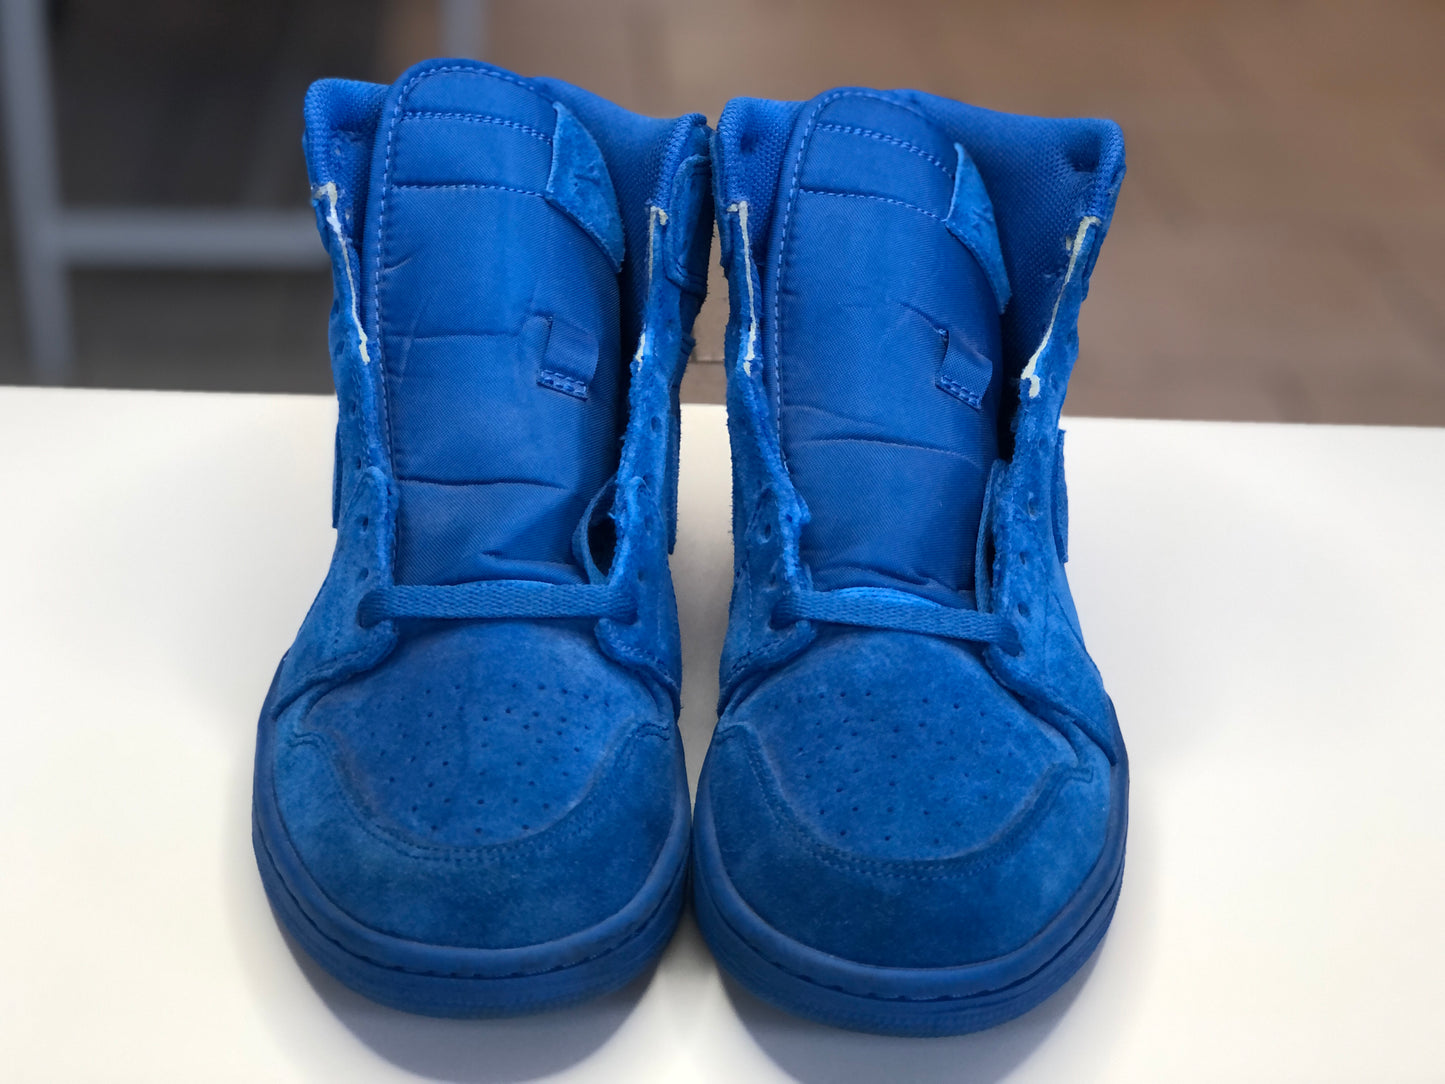 Jordan 1 Blue Suede size 9.5